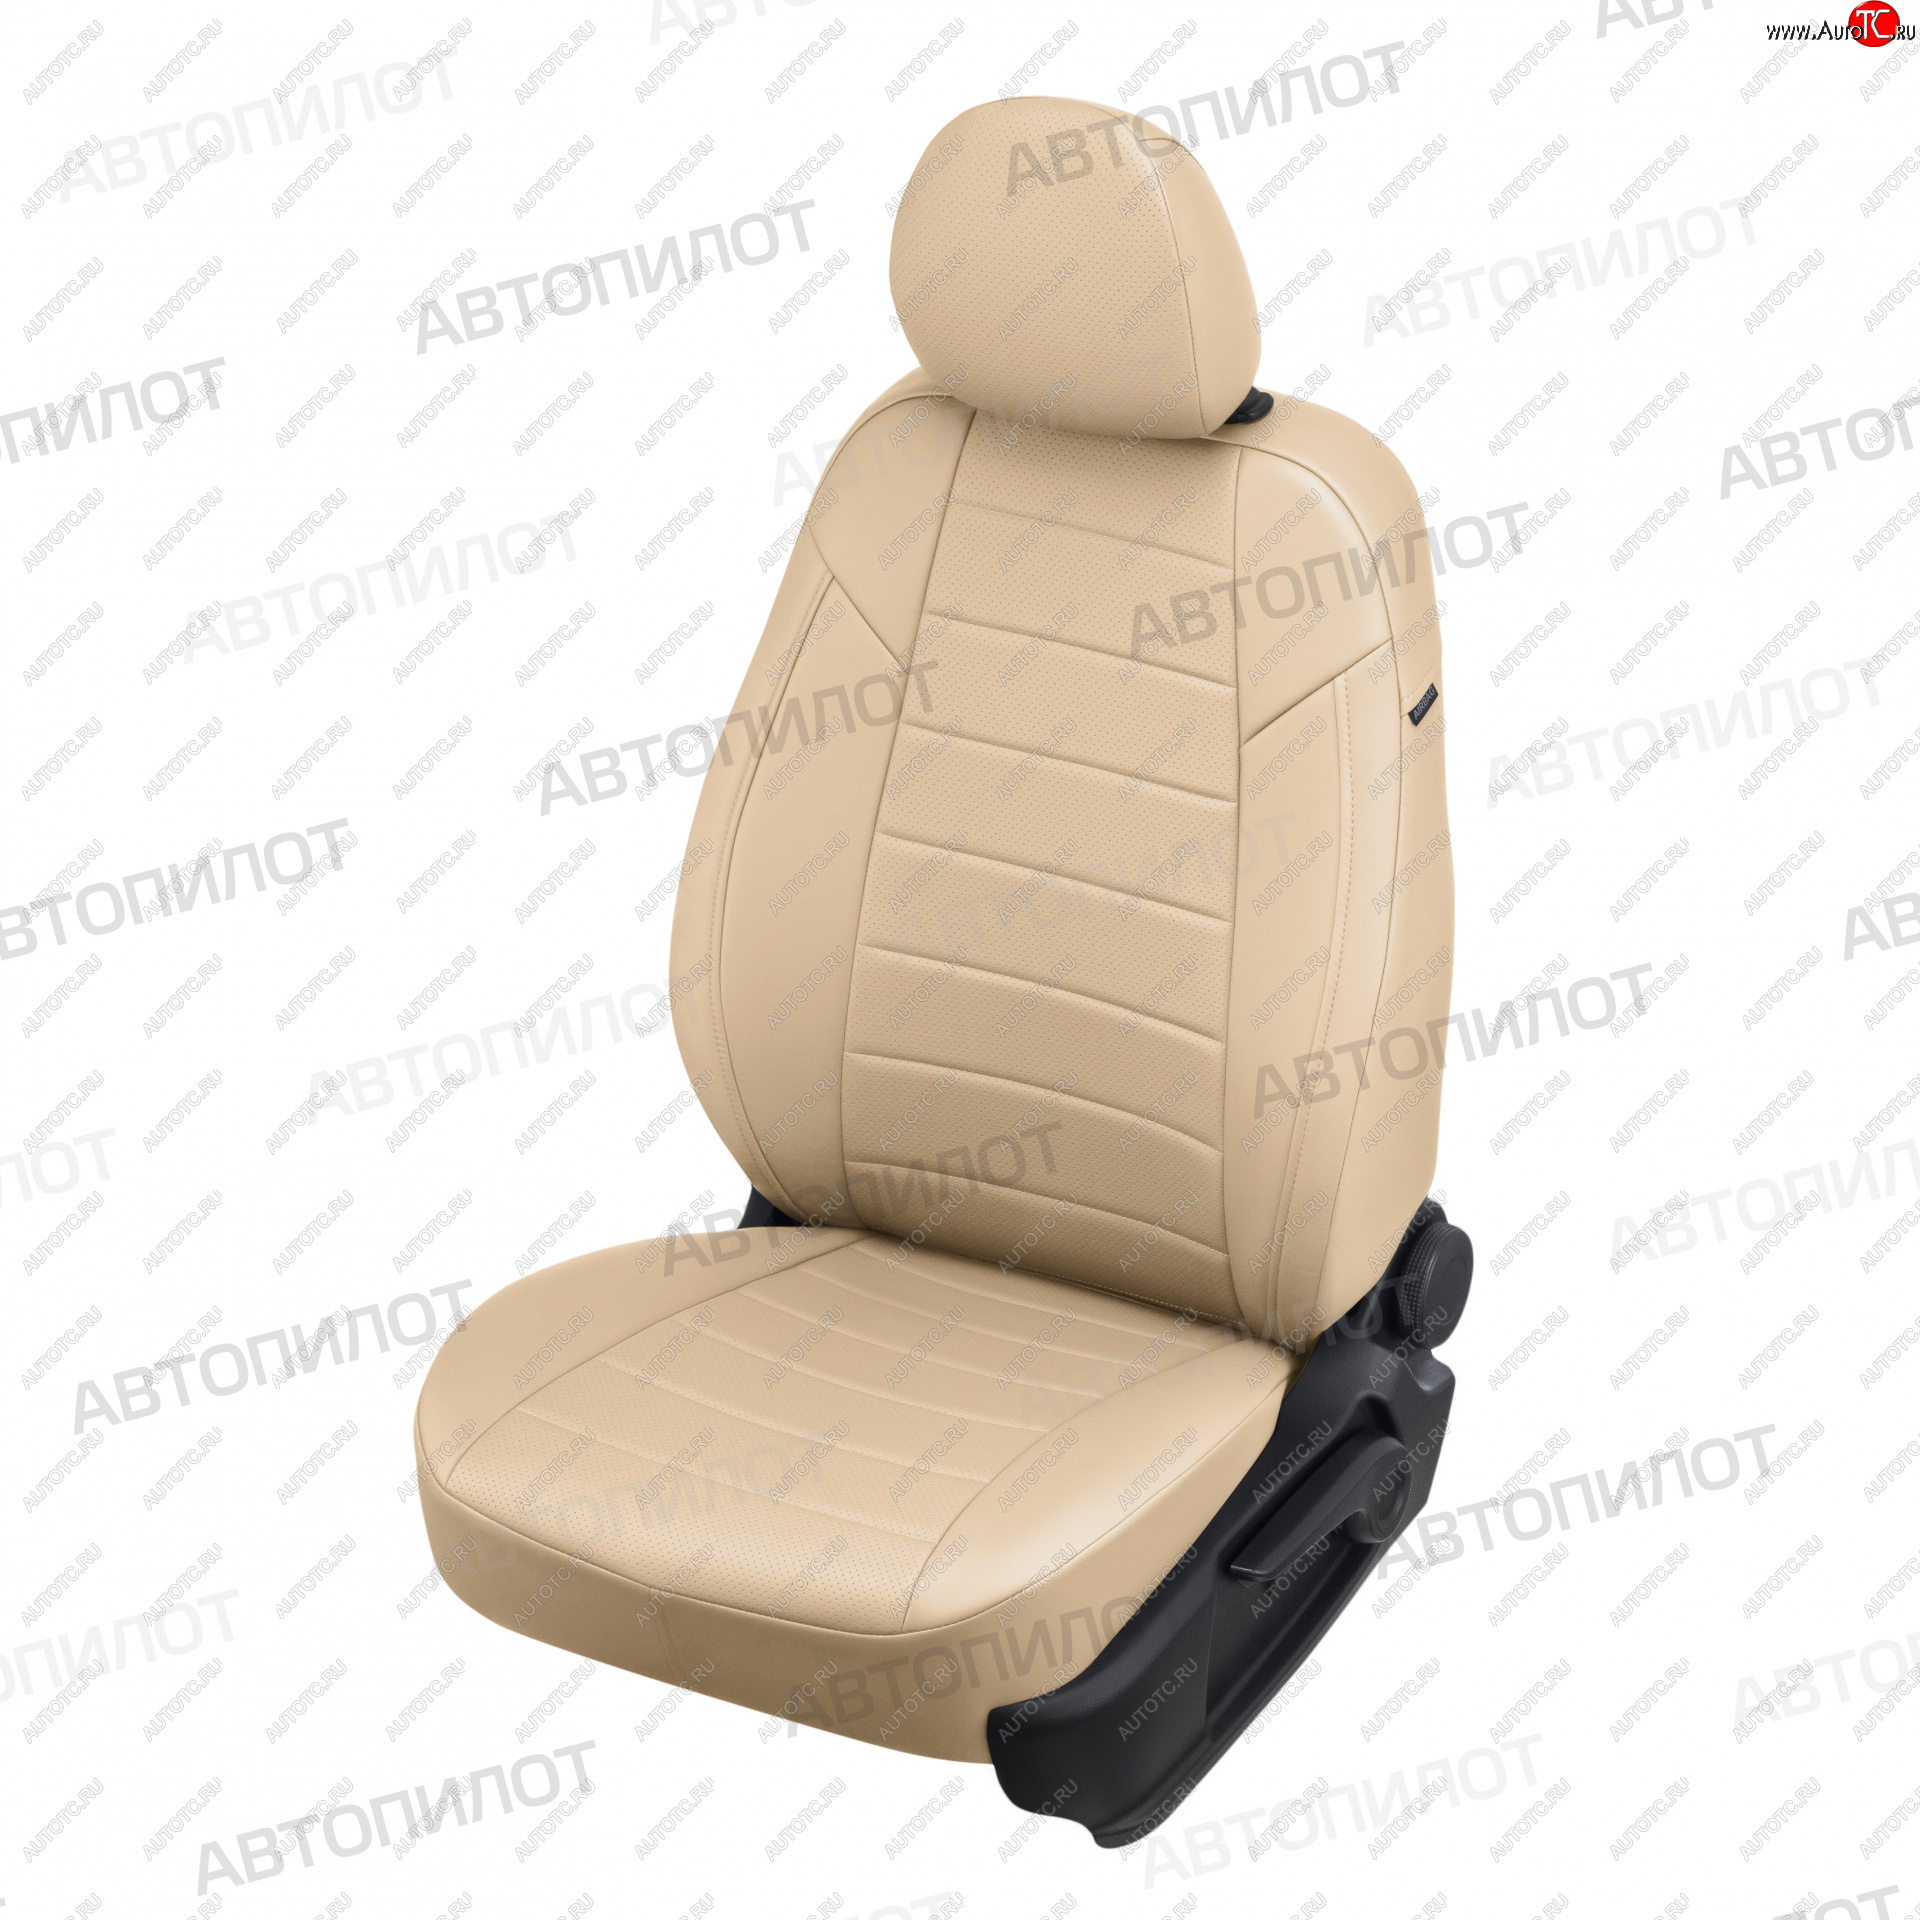 13 849 р. Чехлы сидений (Trend, экокожа) Автопилот  Ford Kuga  1 (2008-2013) (бежевый)